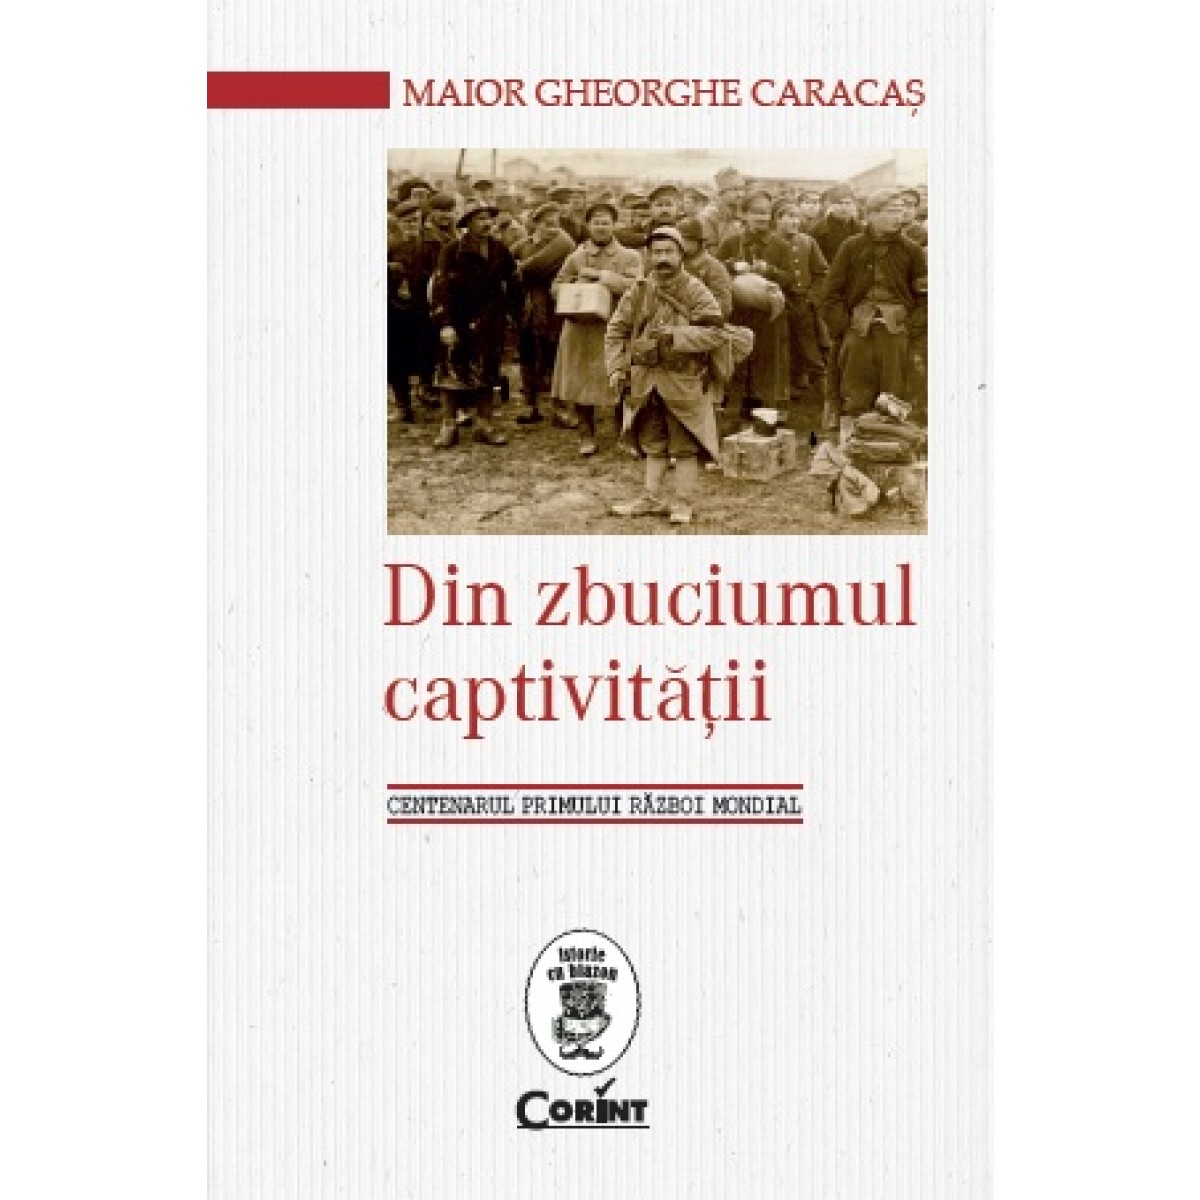 Din zbuciumul captivitatii | Maior Gheorghe Caracas carturesti.ro Biografii, memorii, jurnale